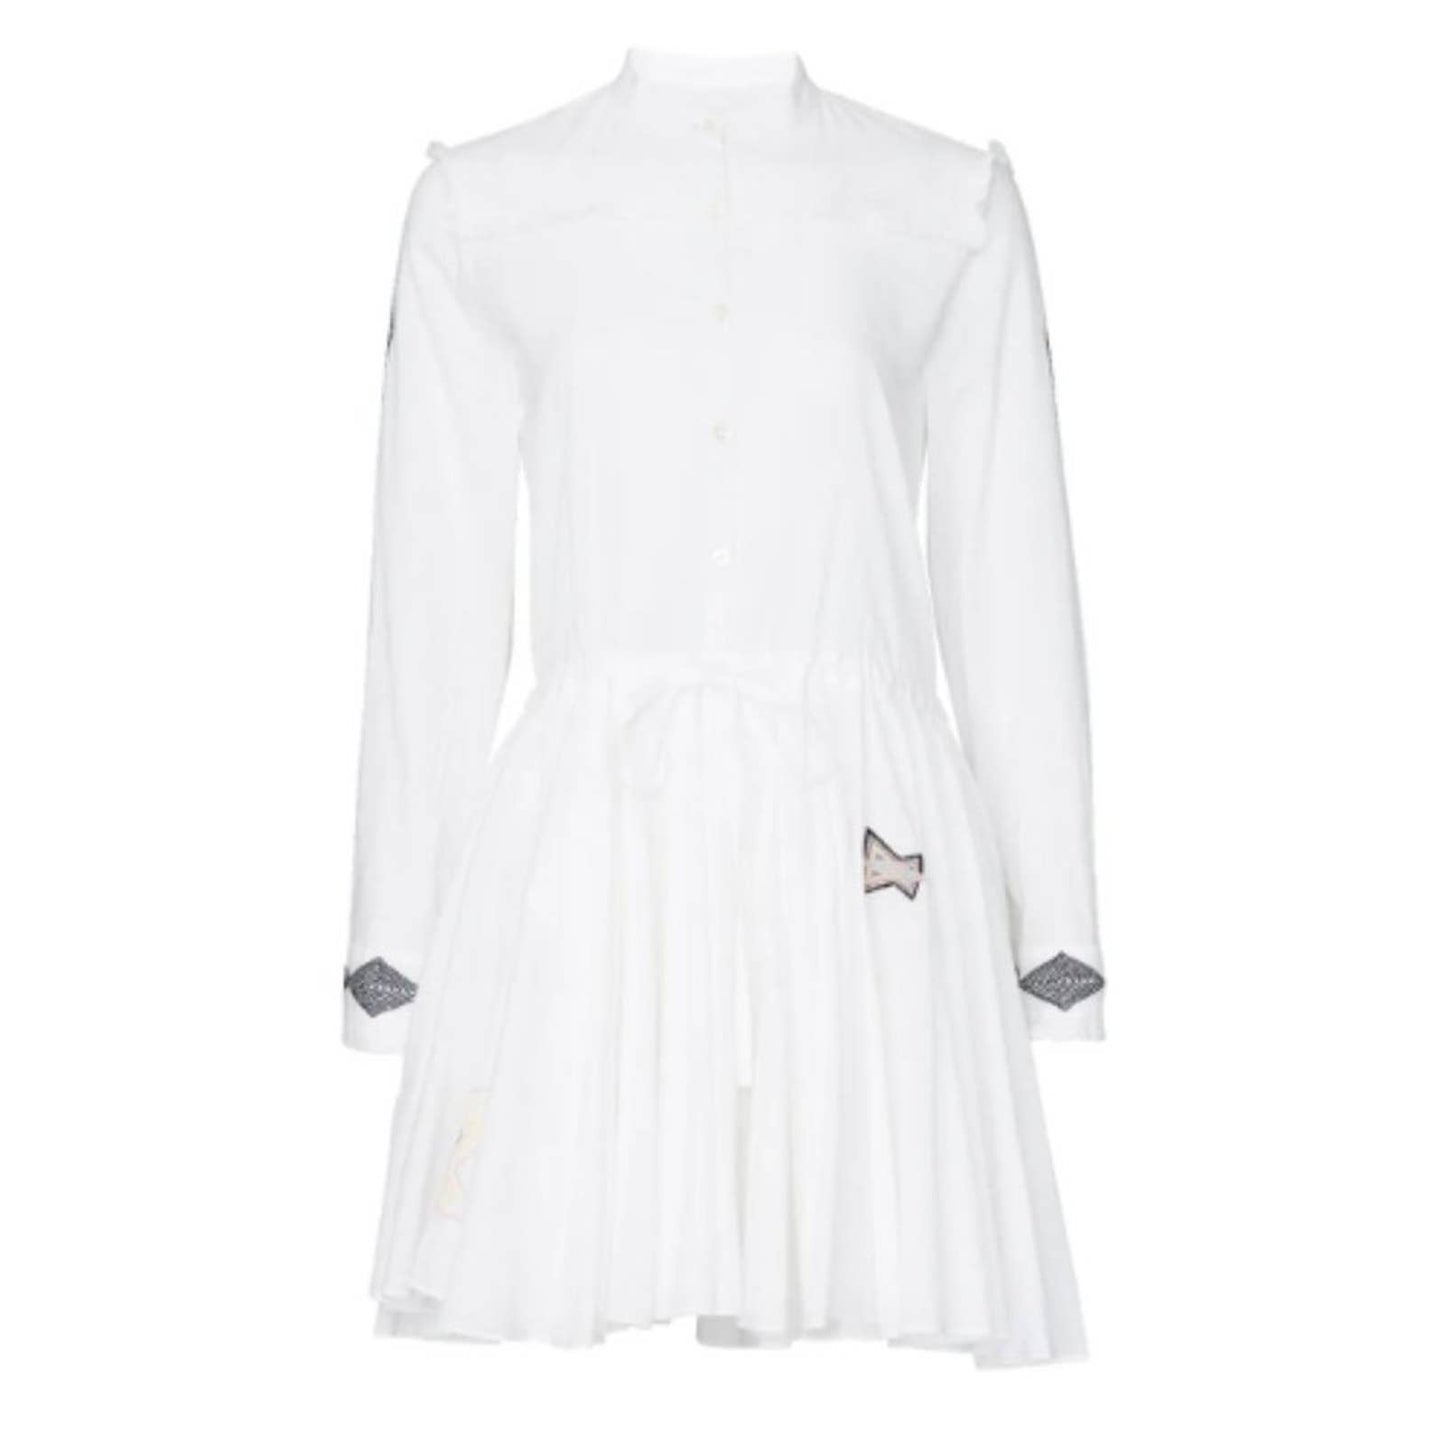 Zadig & Voltaire Ranil Dress in White Size Small